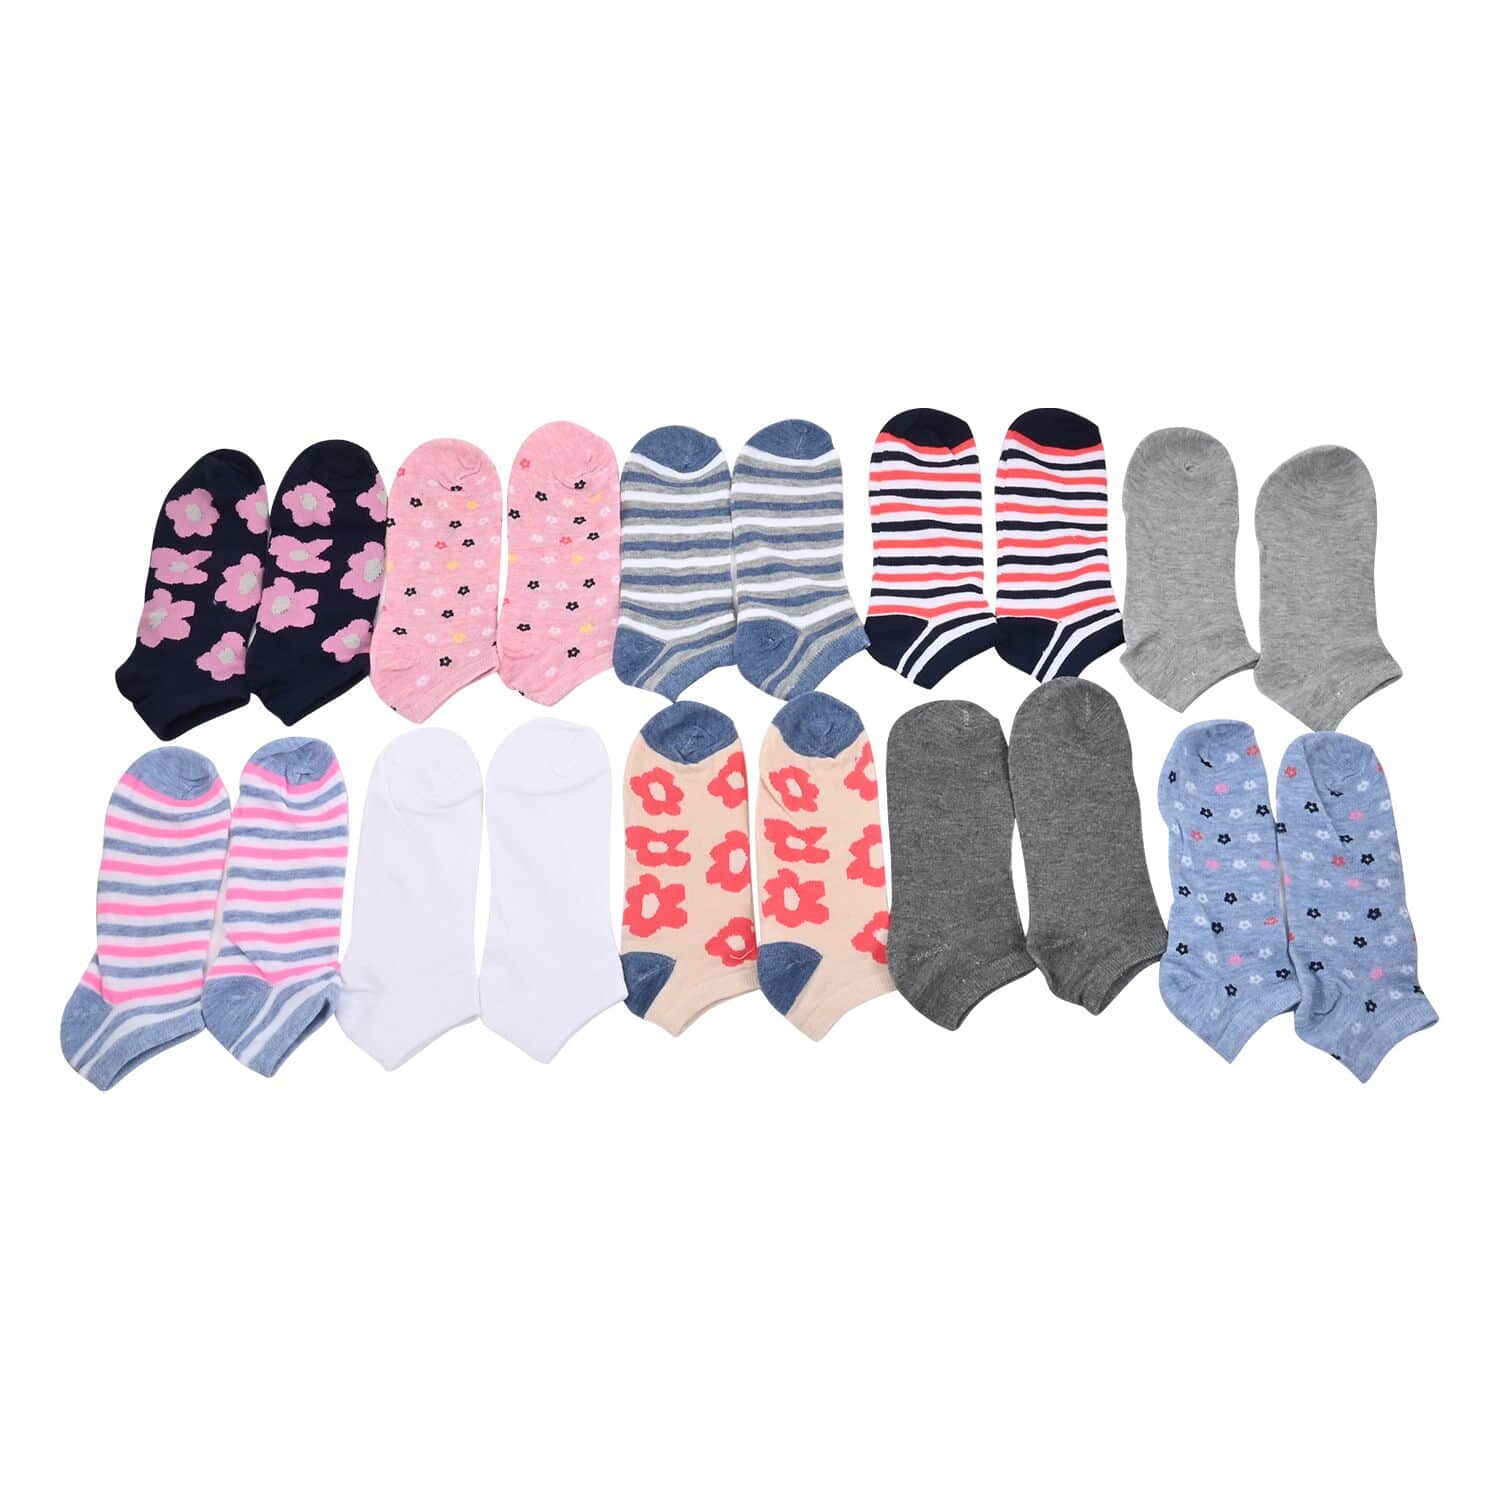 XOXO 10 Pairs Women's Low Cut Floral & Stripe Socks (Sizes 4-10)  -Blue/Lilac/Gray